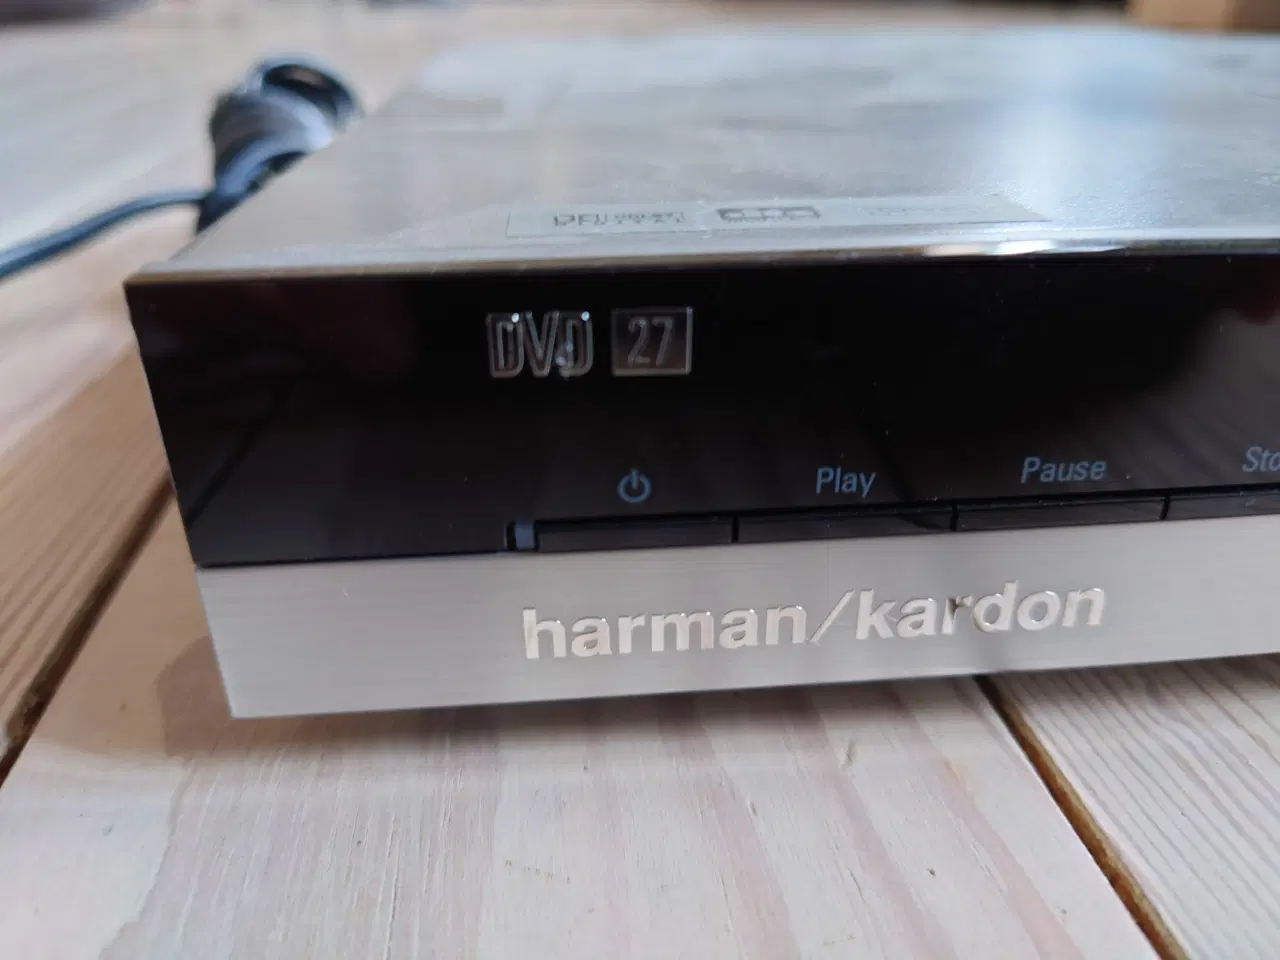 Billede 2 - Harman/Kardon SUB-TS11, DVD 27, AVR 132